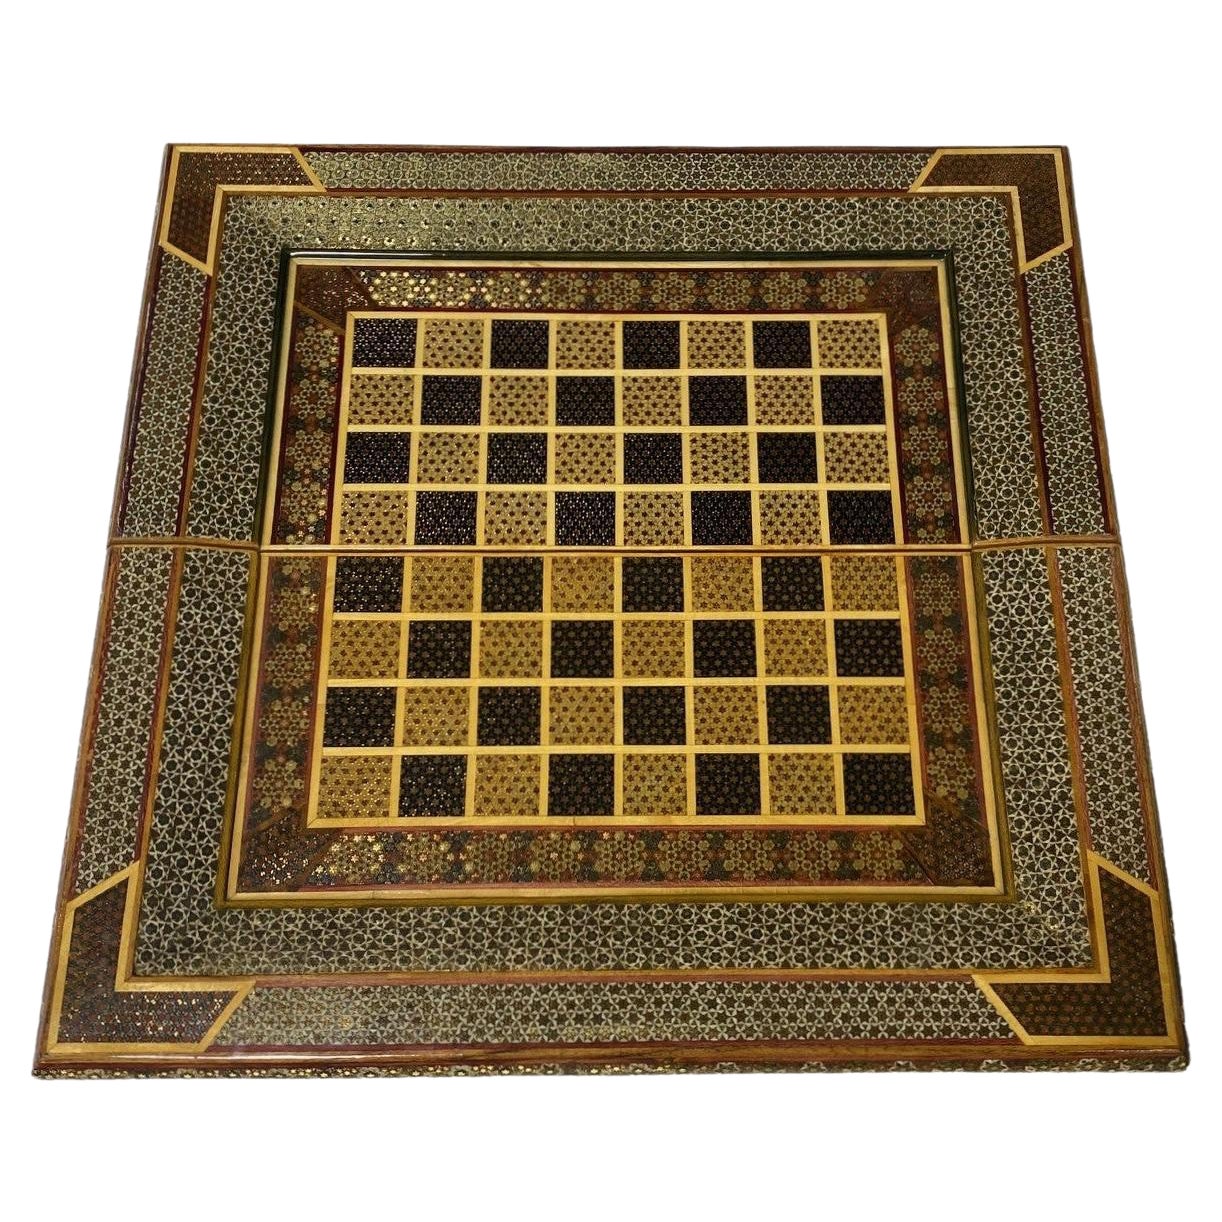 Moroccan Moorish Middle Eastern Inlaid Micro Mosaic Backgammon and Chess Board